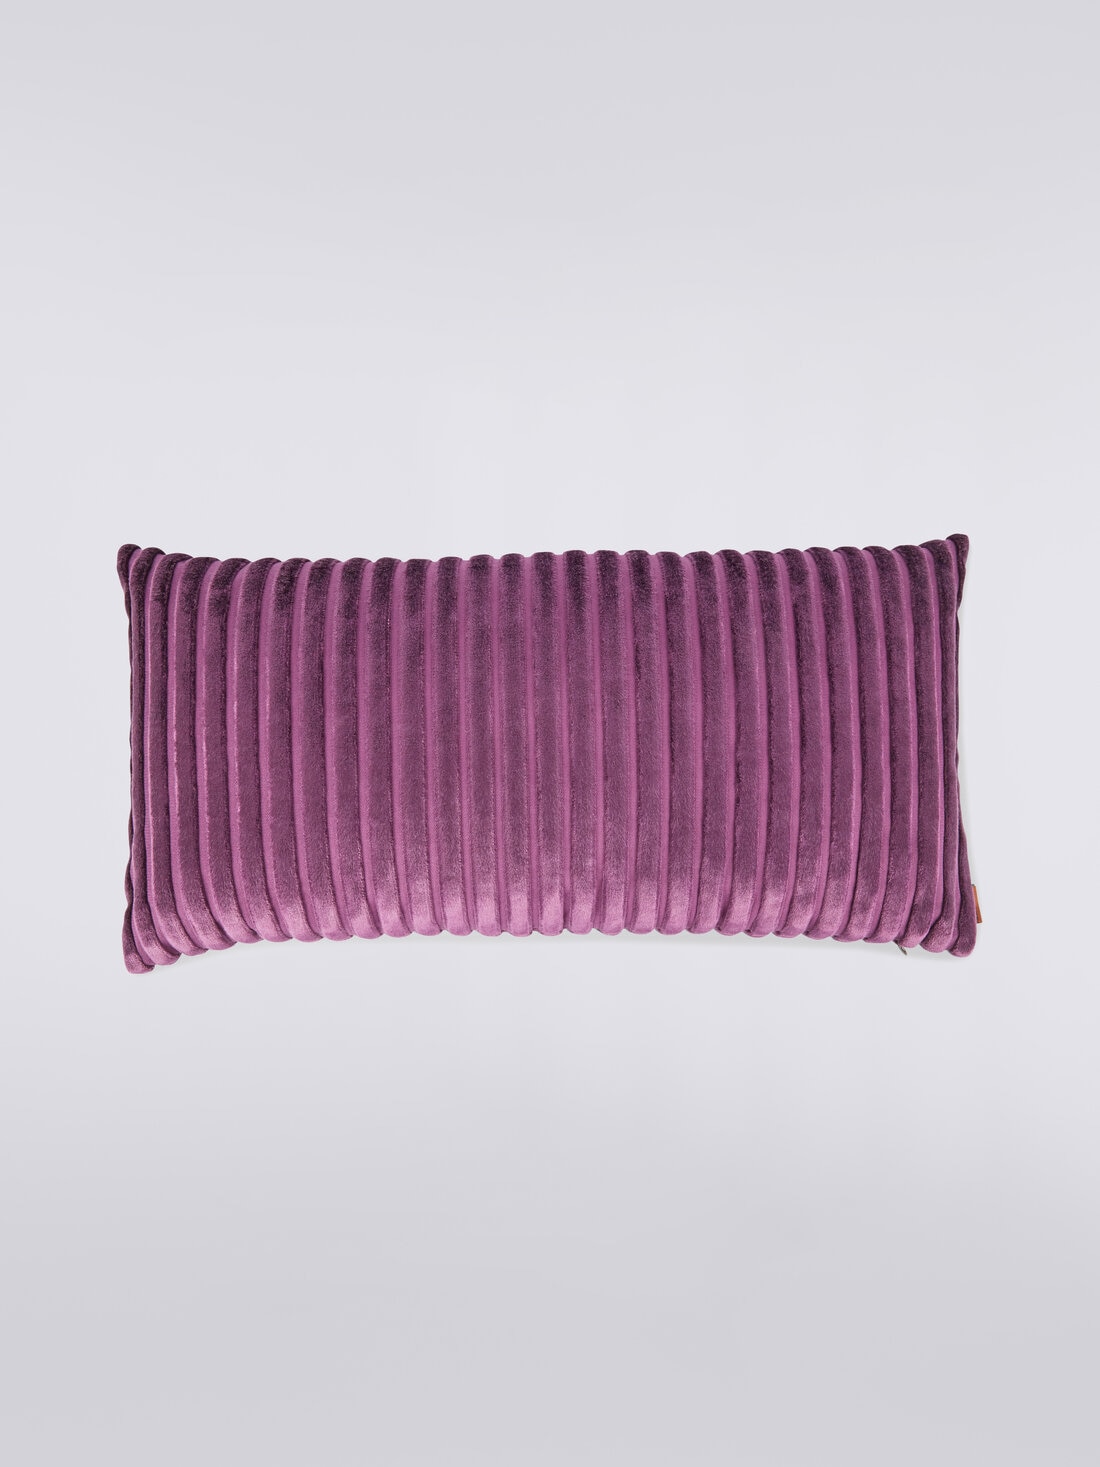 Coomba Cushion 30X60, Purple  - 8033050074525 - 0